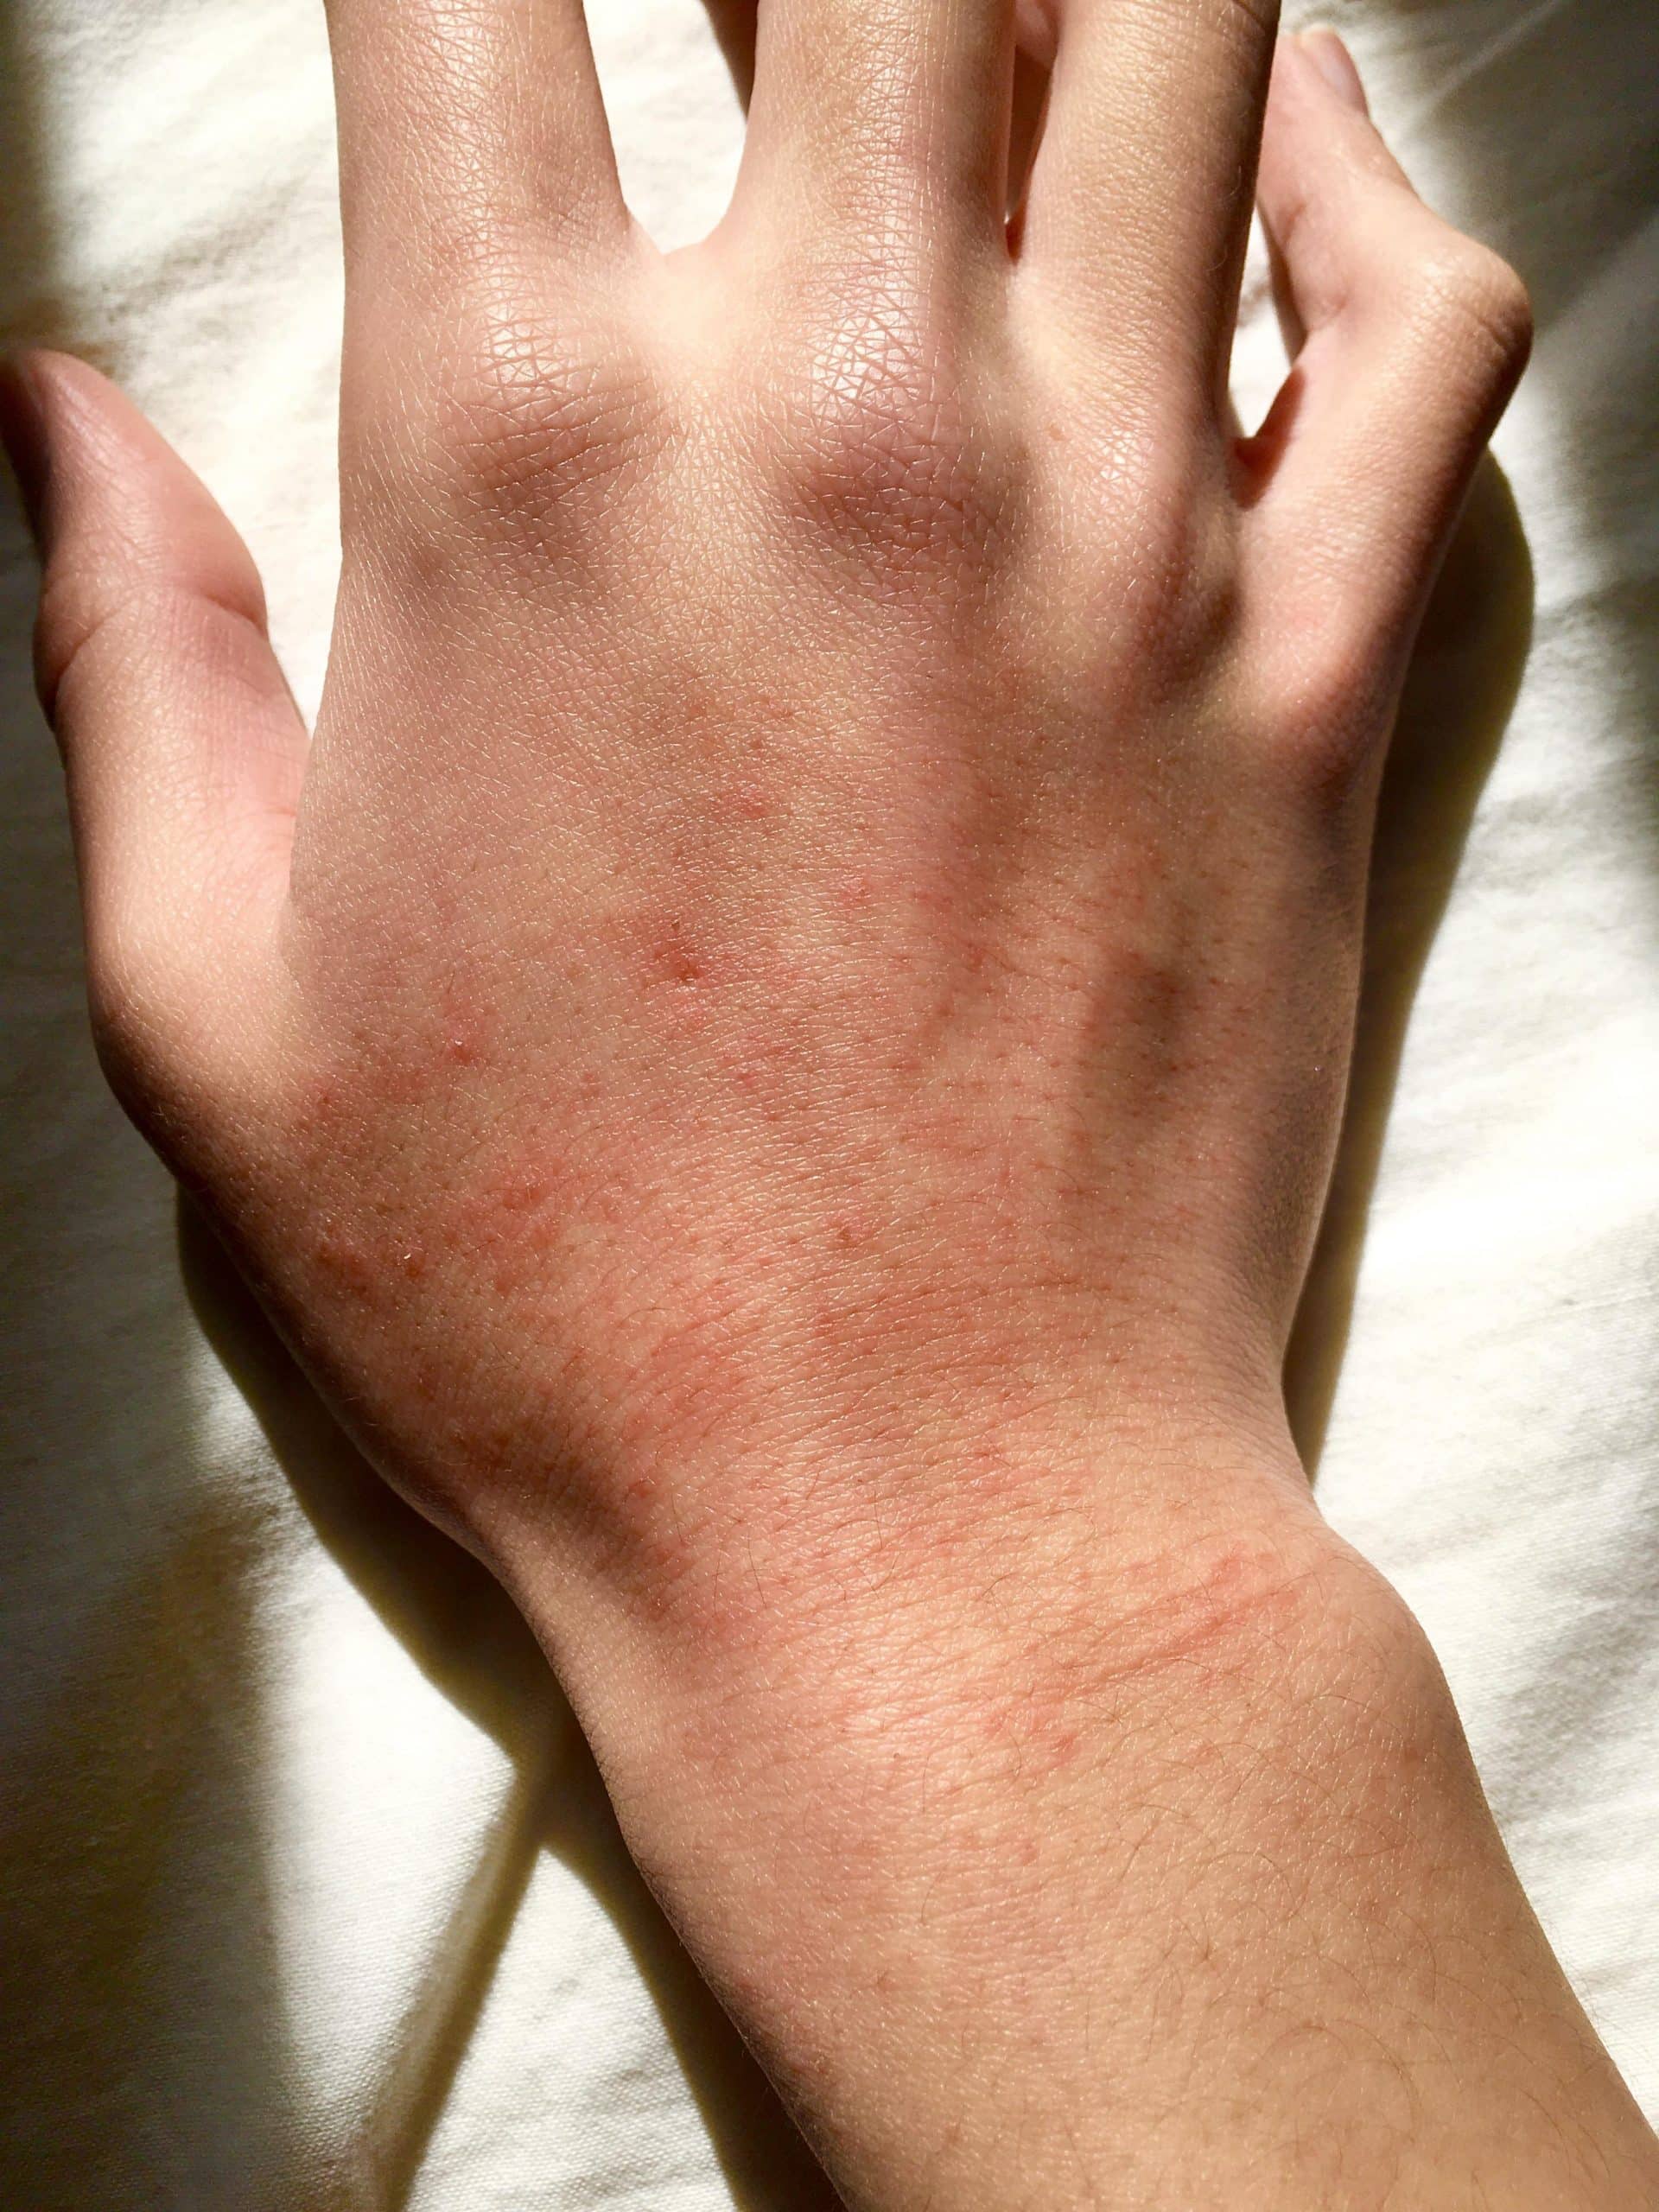 Dry skin on hand became painful rash? : Accutane